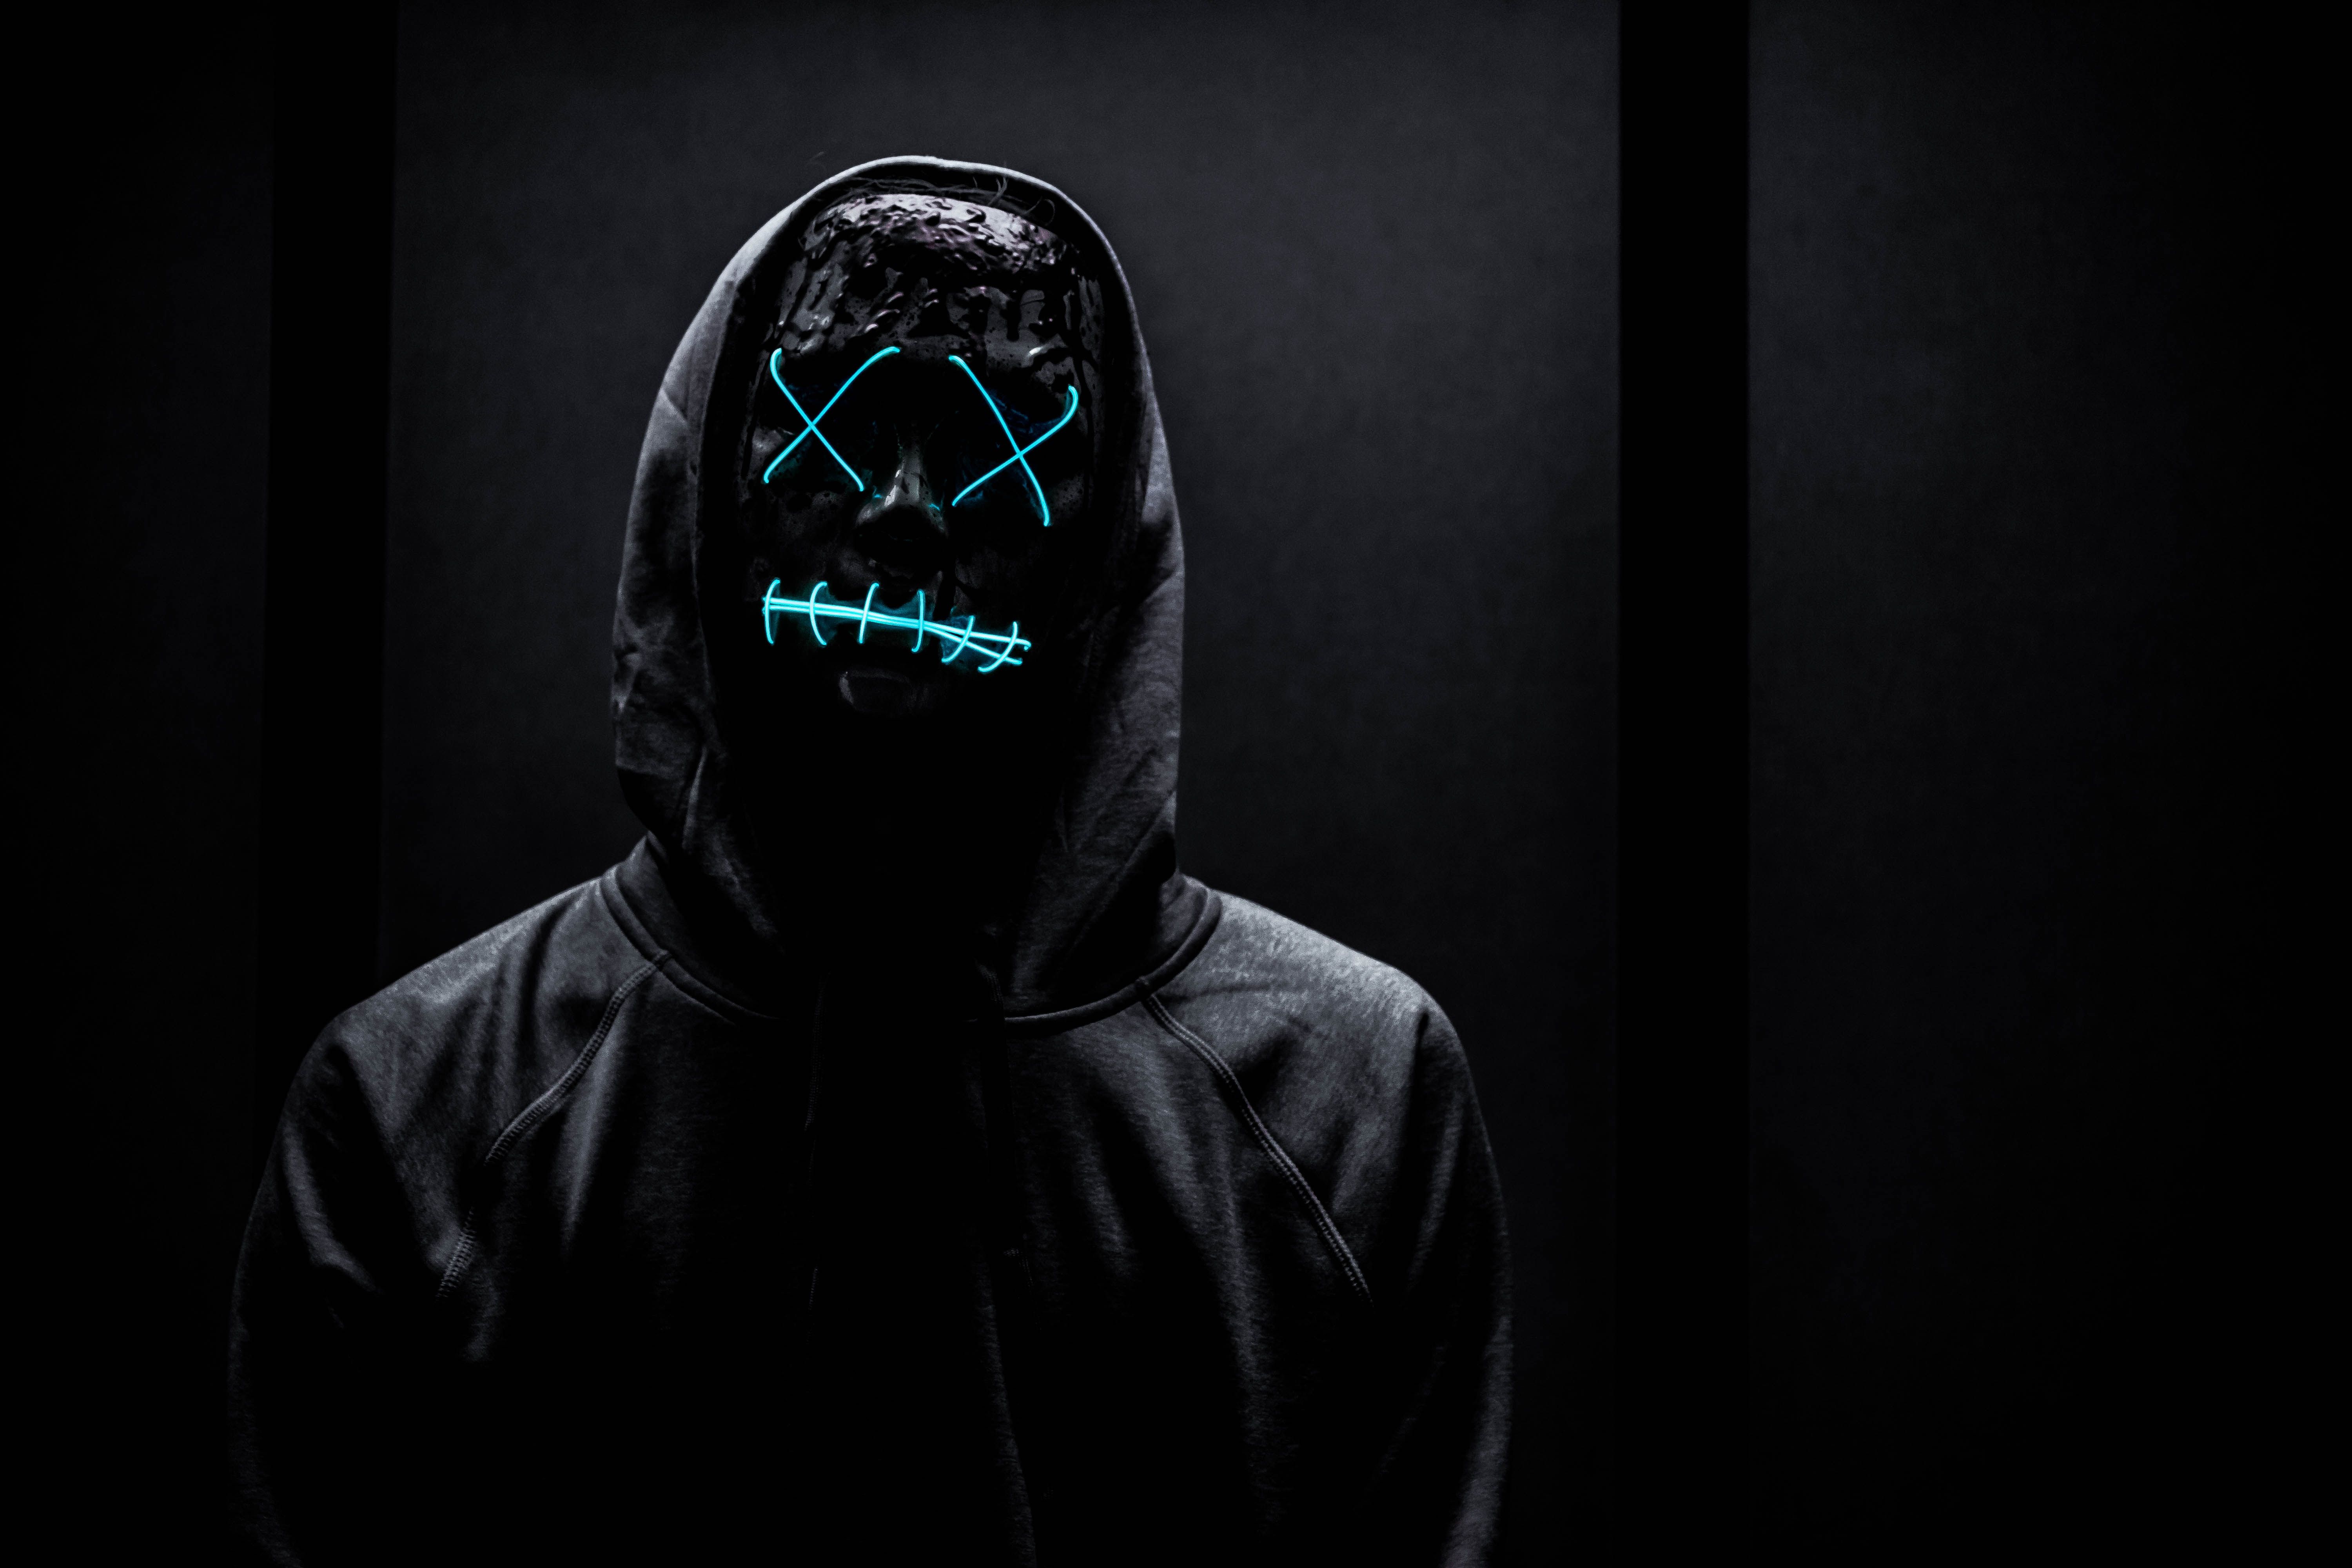 Neon Mask 4K Wallpaper, Man in Black, Dark background, Hoodie, Blue light, 5K, Photography